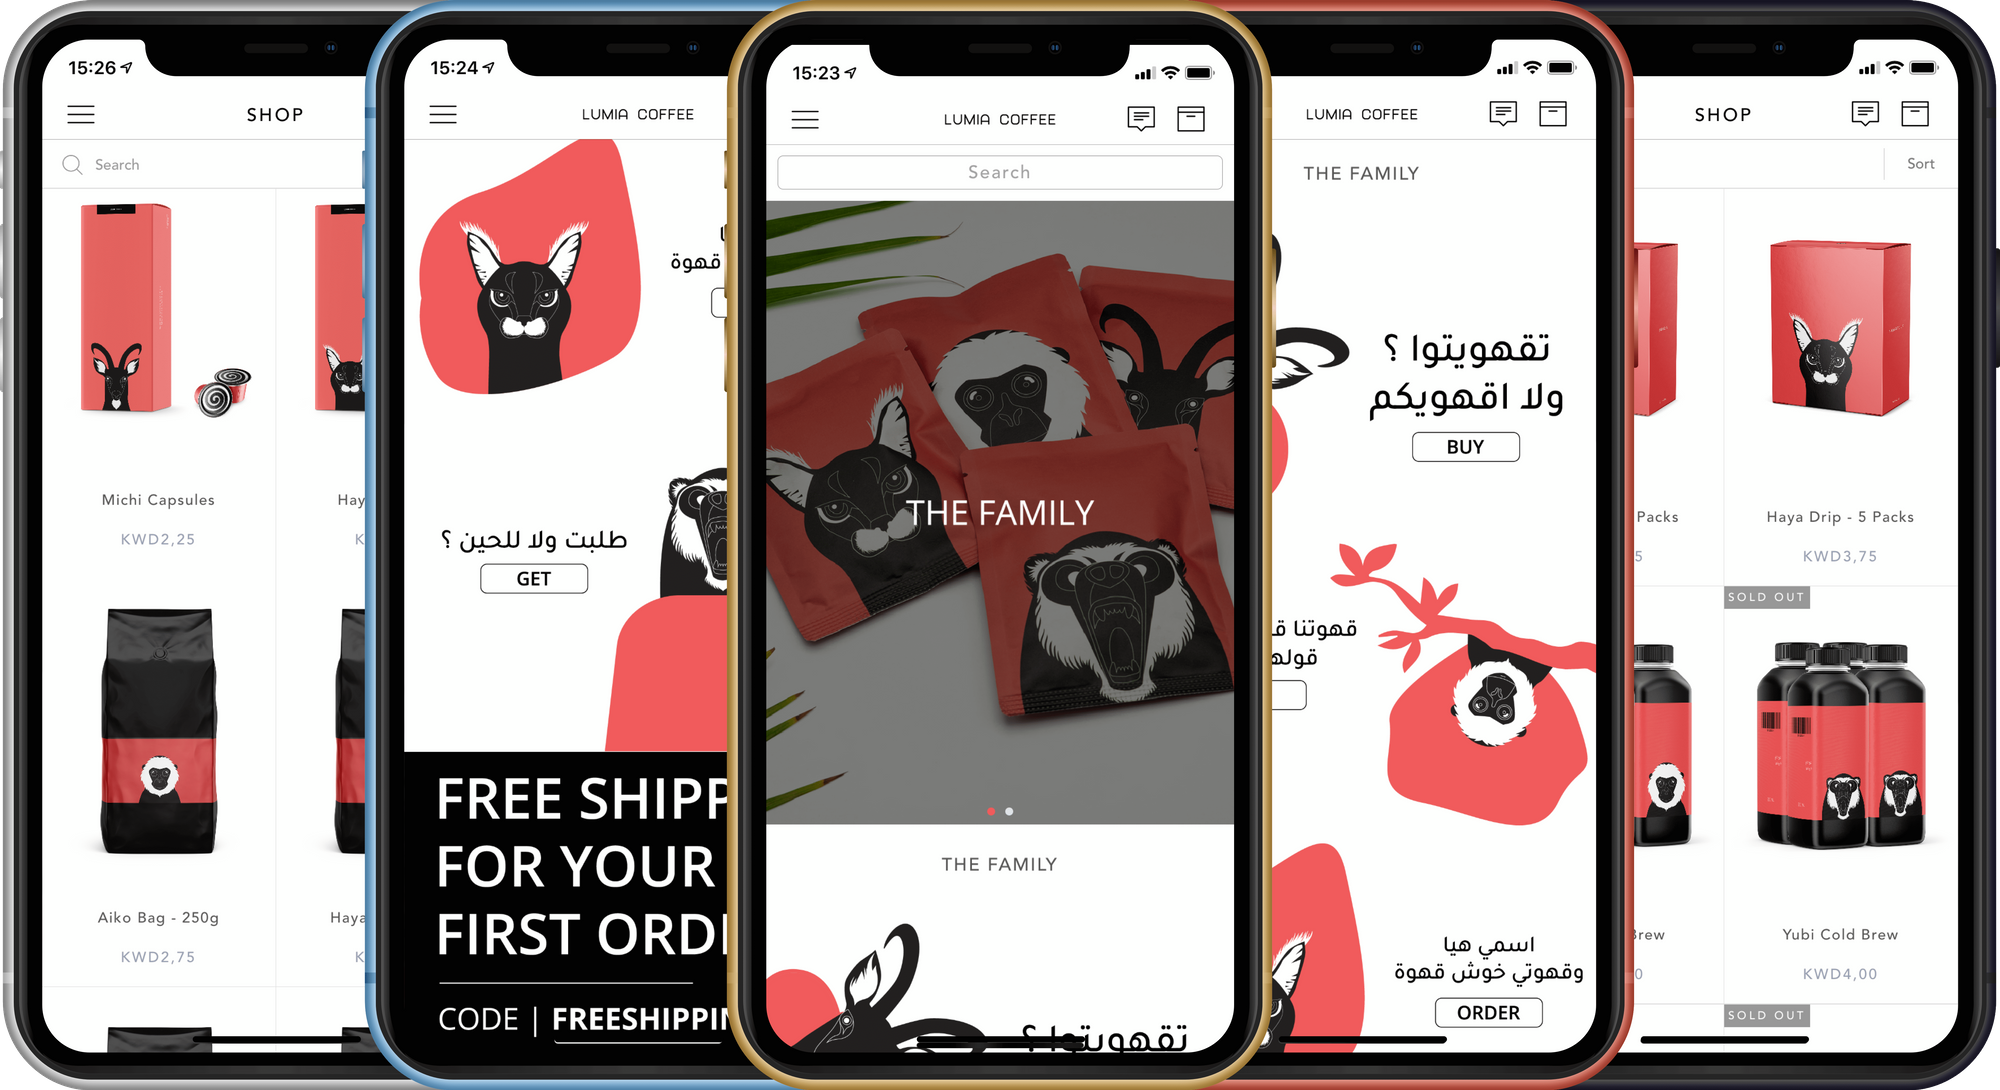 Lumia Coffee Mobile App Screenshots